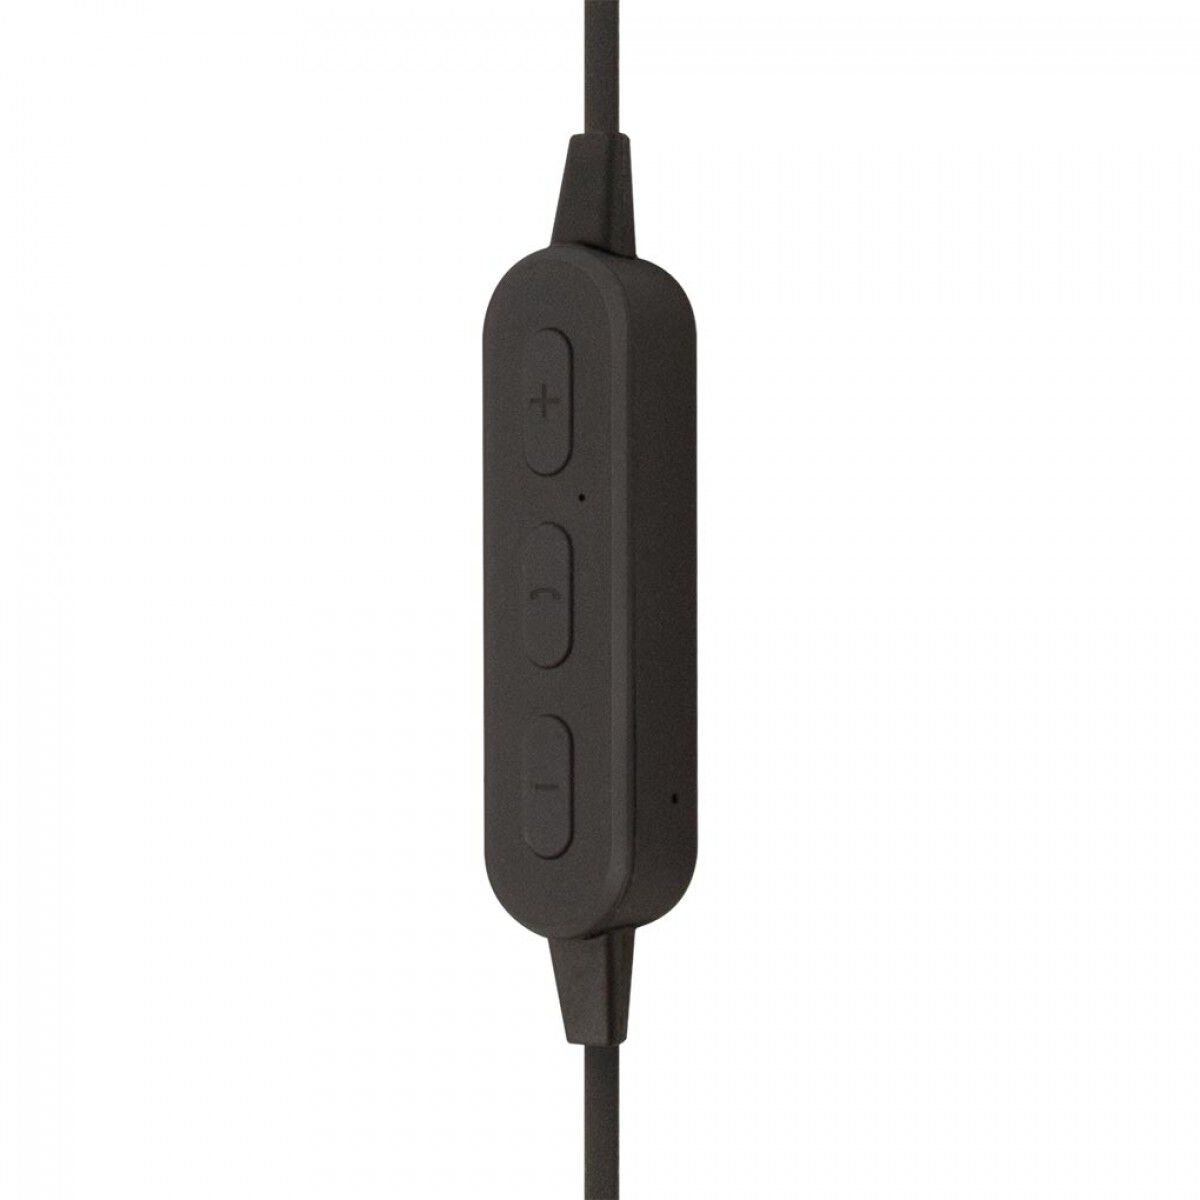 Mission™ Wireless earbuds (Black)